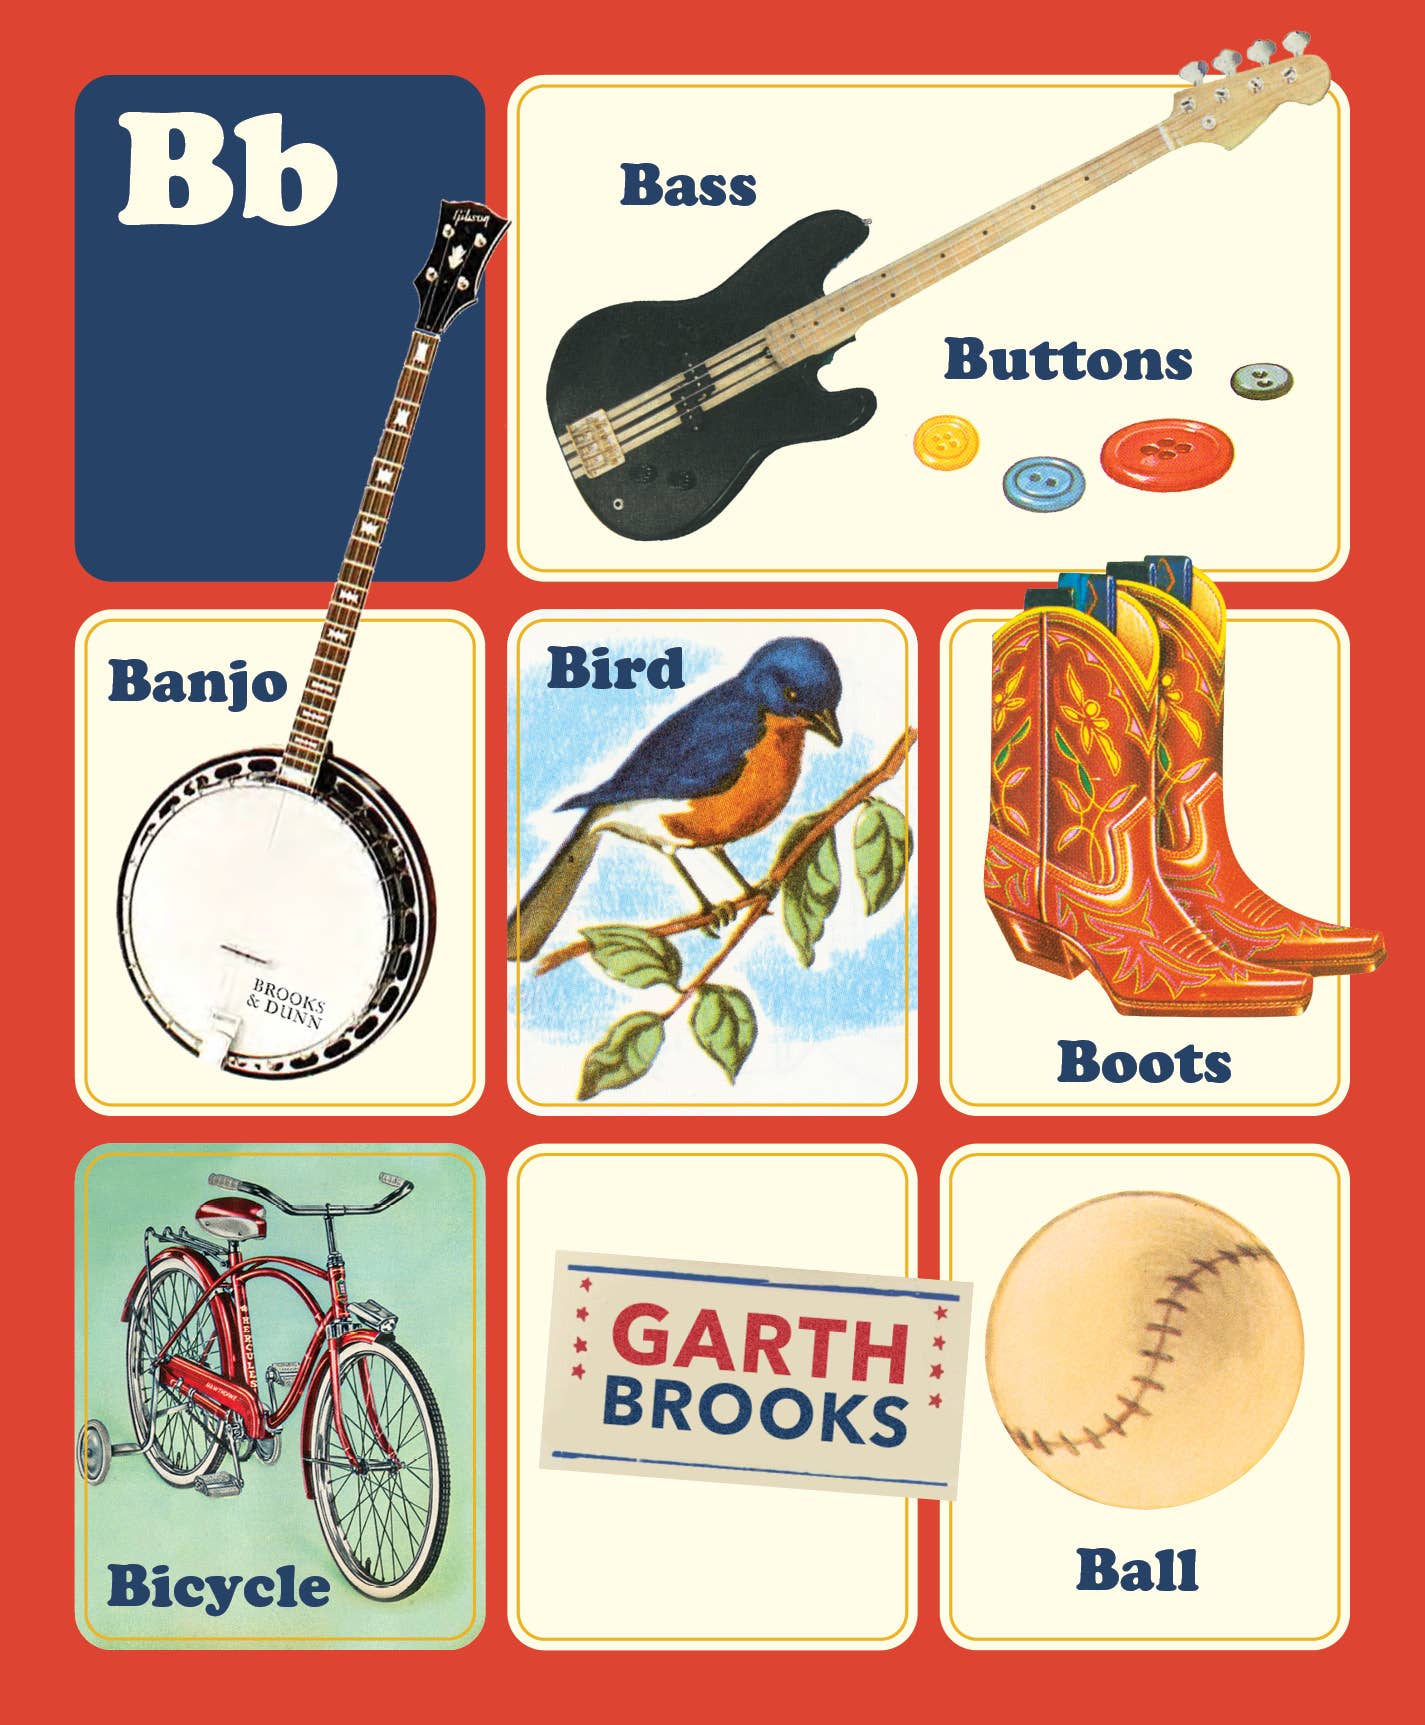 Country Music Abc-Children's Board Book